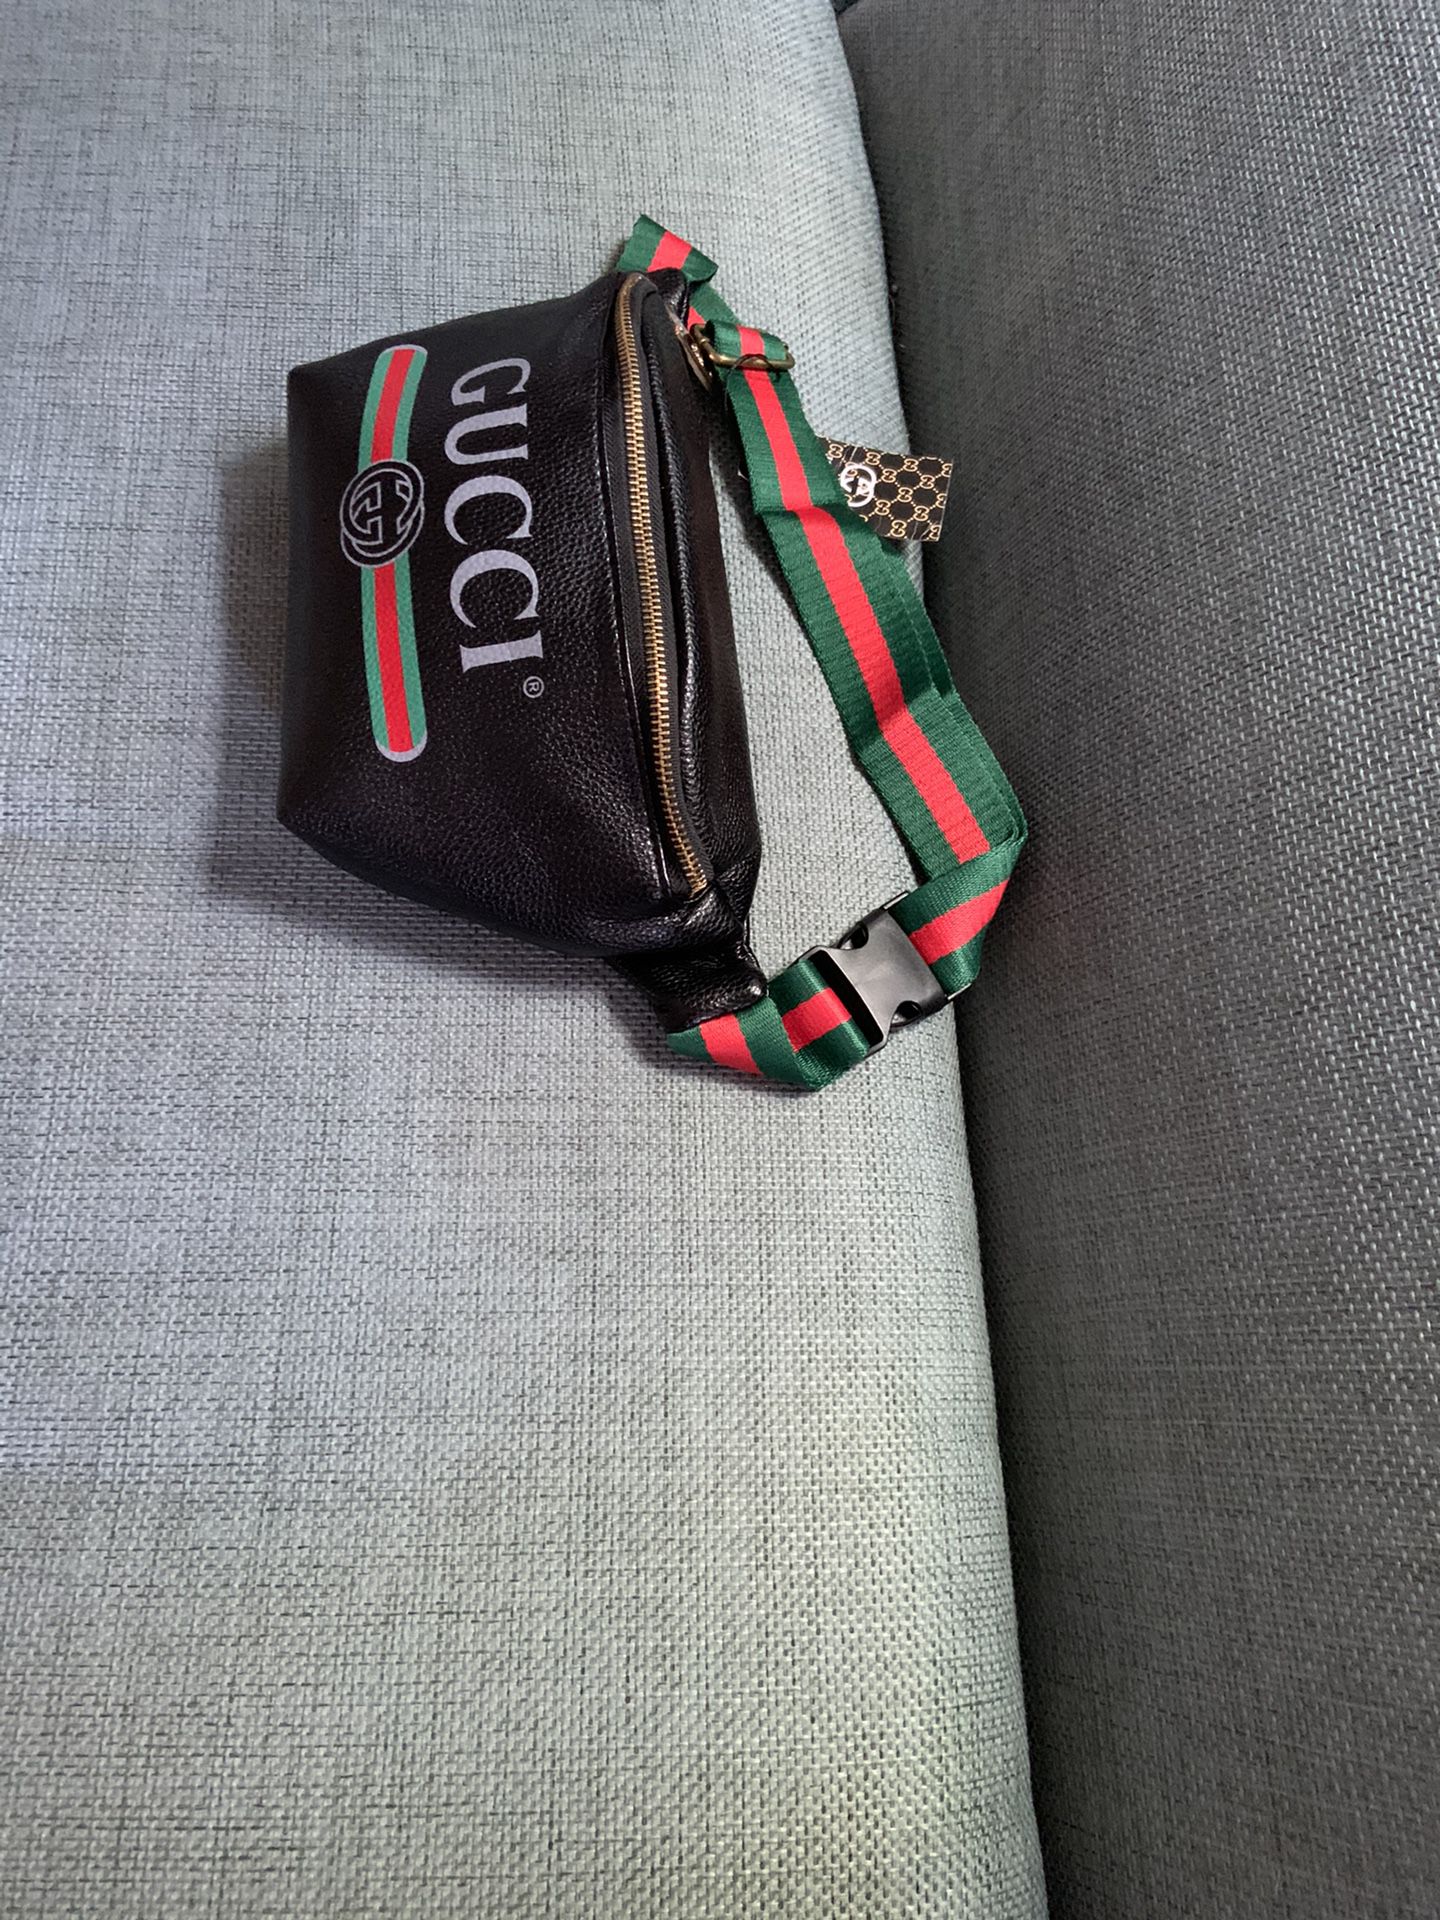 Gucci supreme waist chain belt purse handbag sunglasses case wallet handbag gold brass monogram black leather cross body gym bag pack